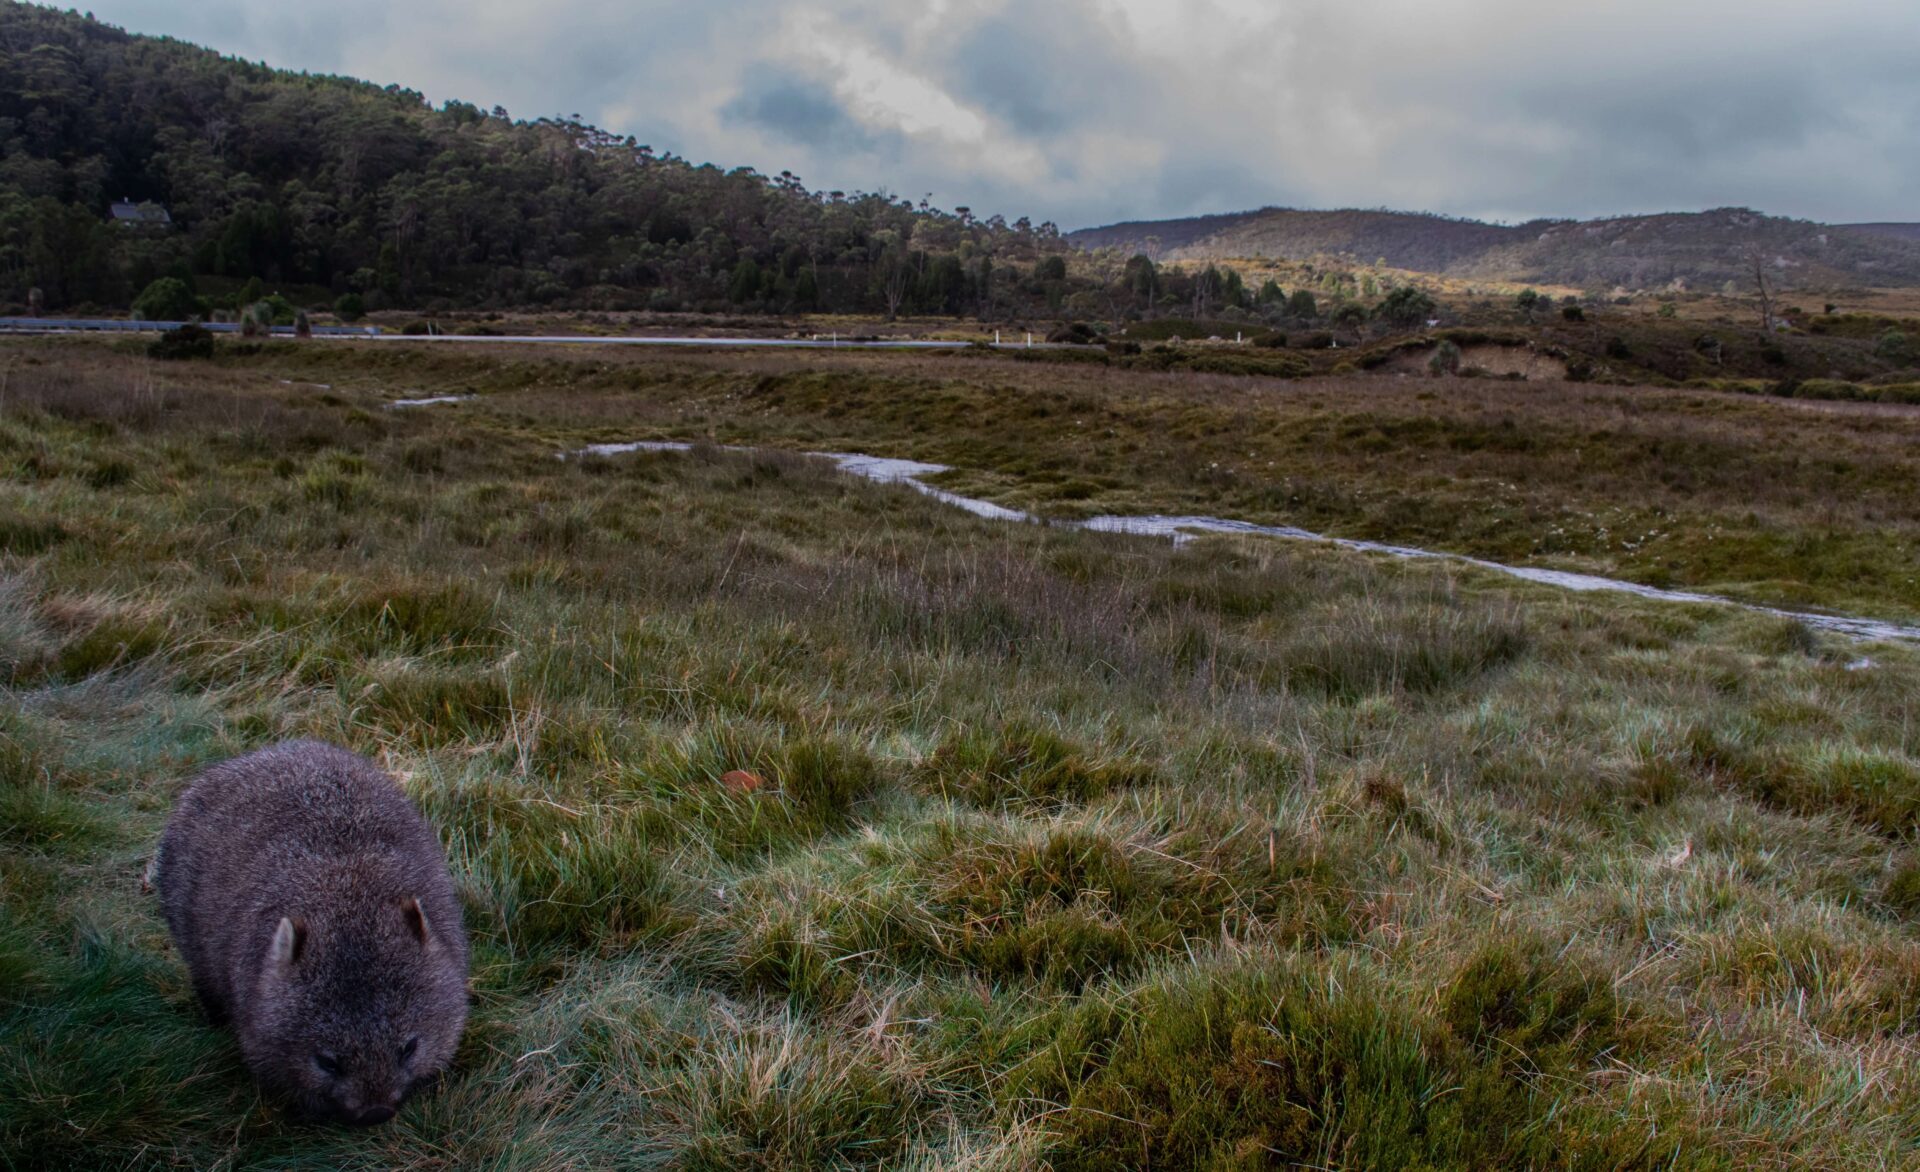 Wombat munching grass in Tasmania grasslands